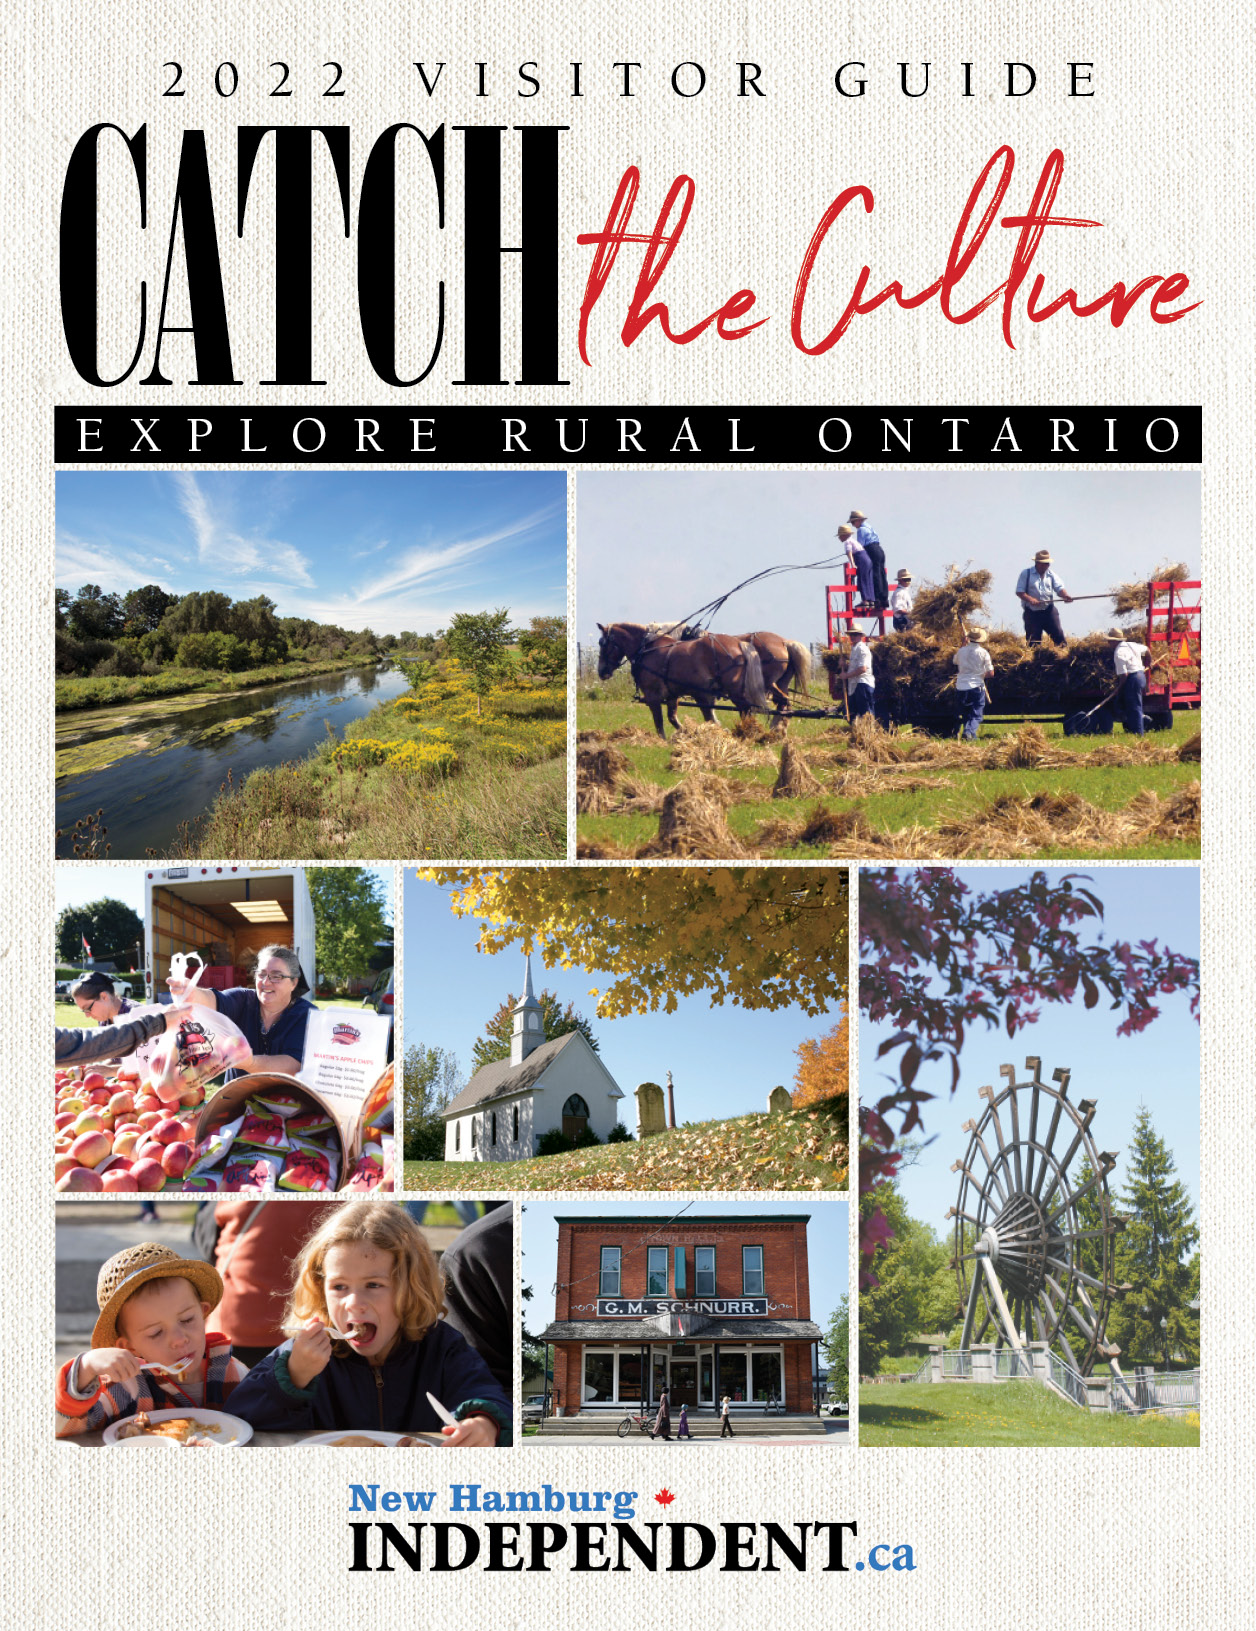 Catch the Culture 2022 cover